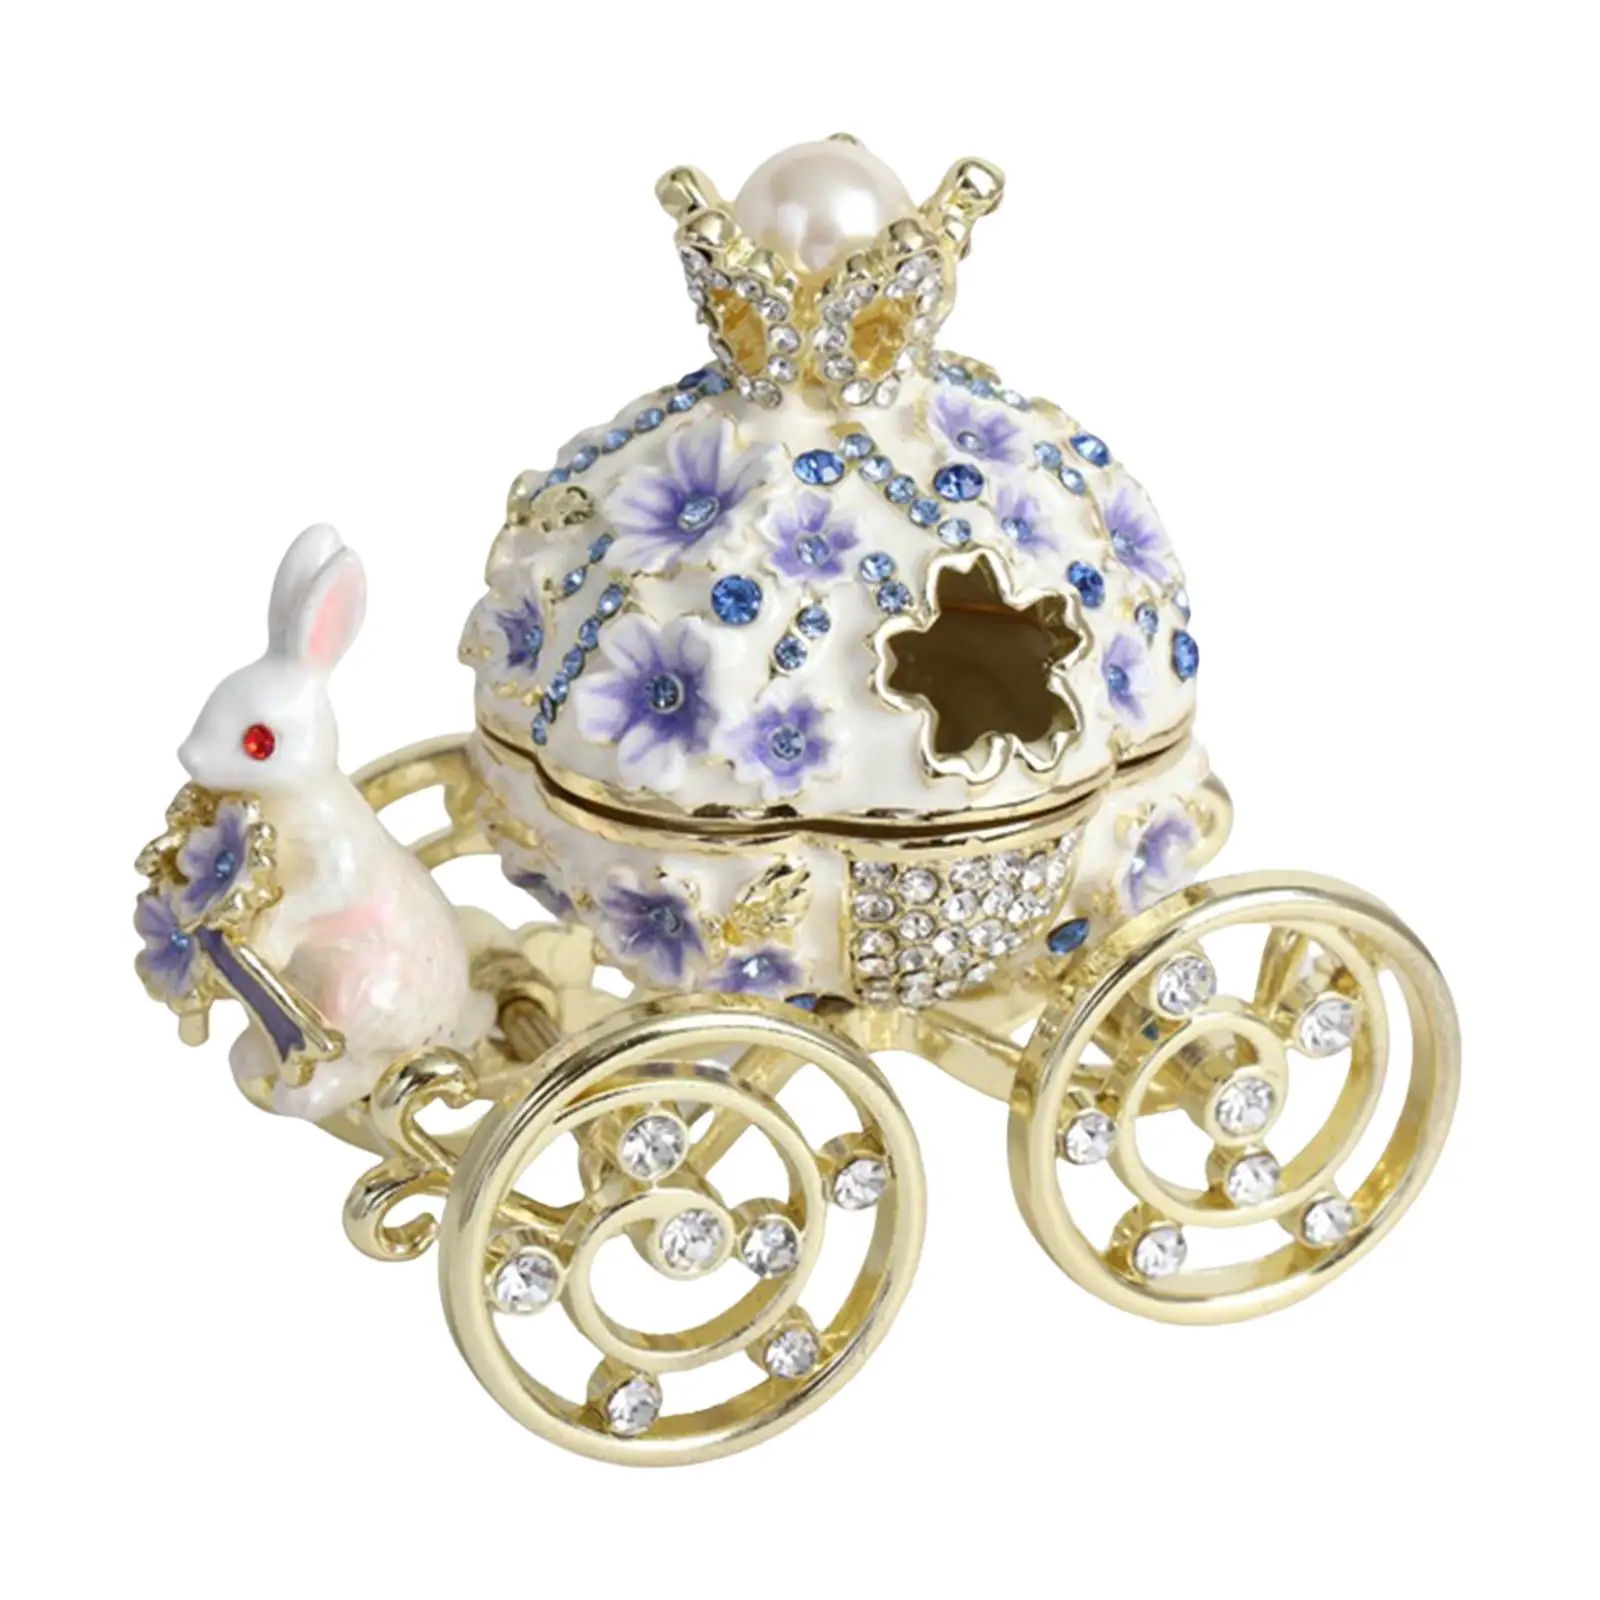  Flower Pumpkin Carriage Trinket Jewelry Box Rabbit Keepsake Hinged Home Decor Decorative Gifts Jewelry Display Organizer